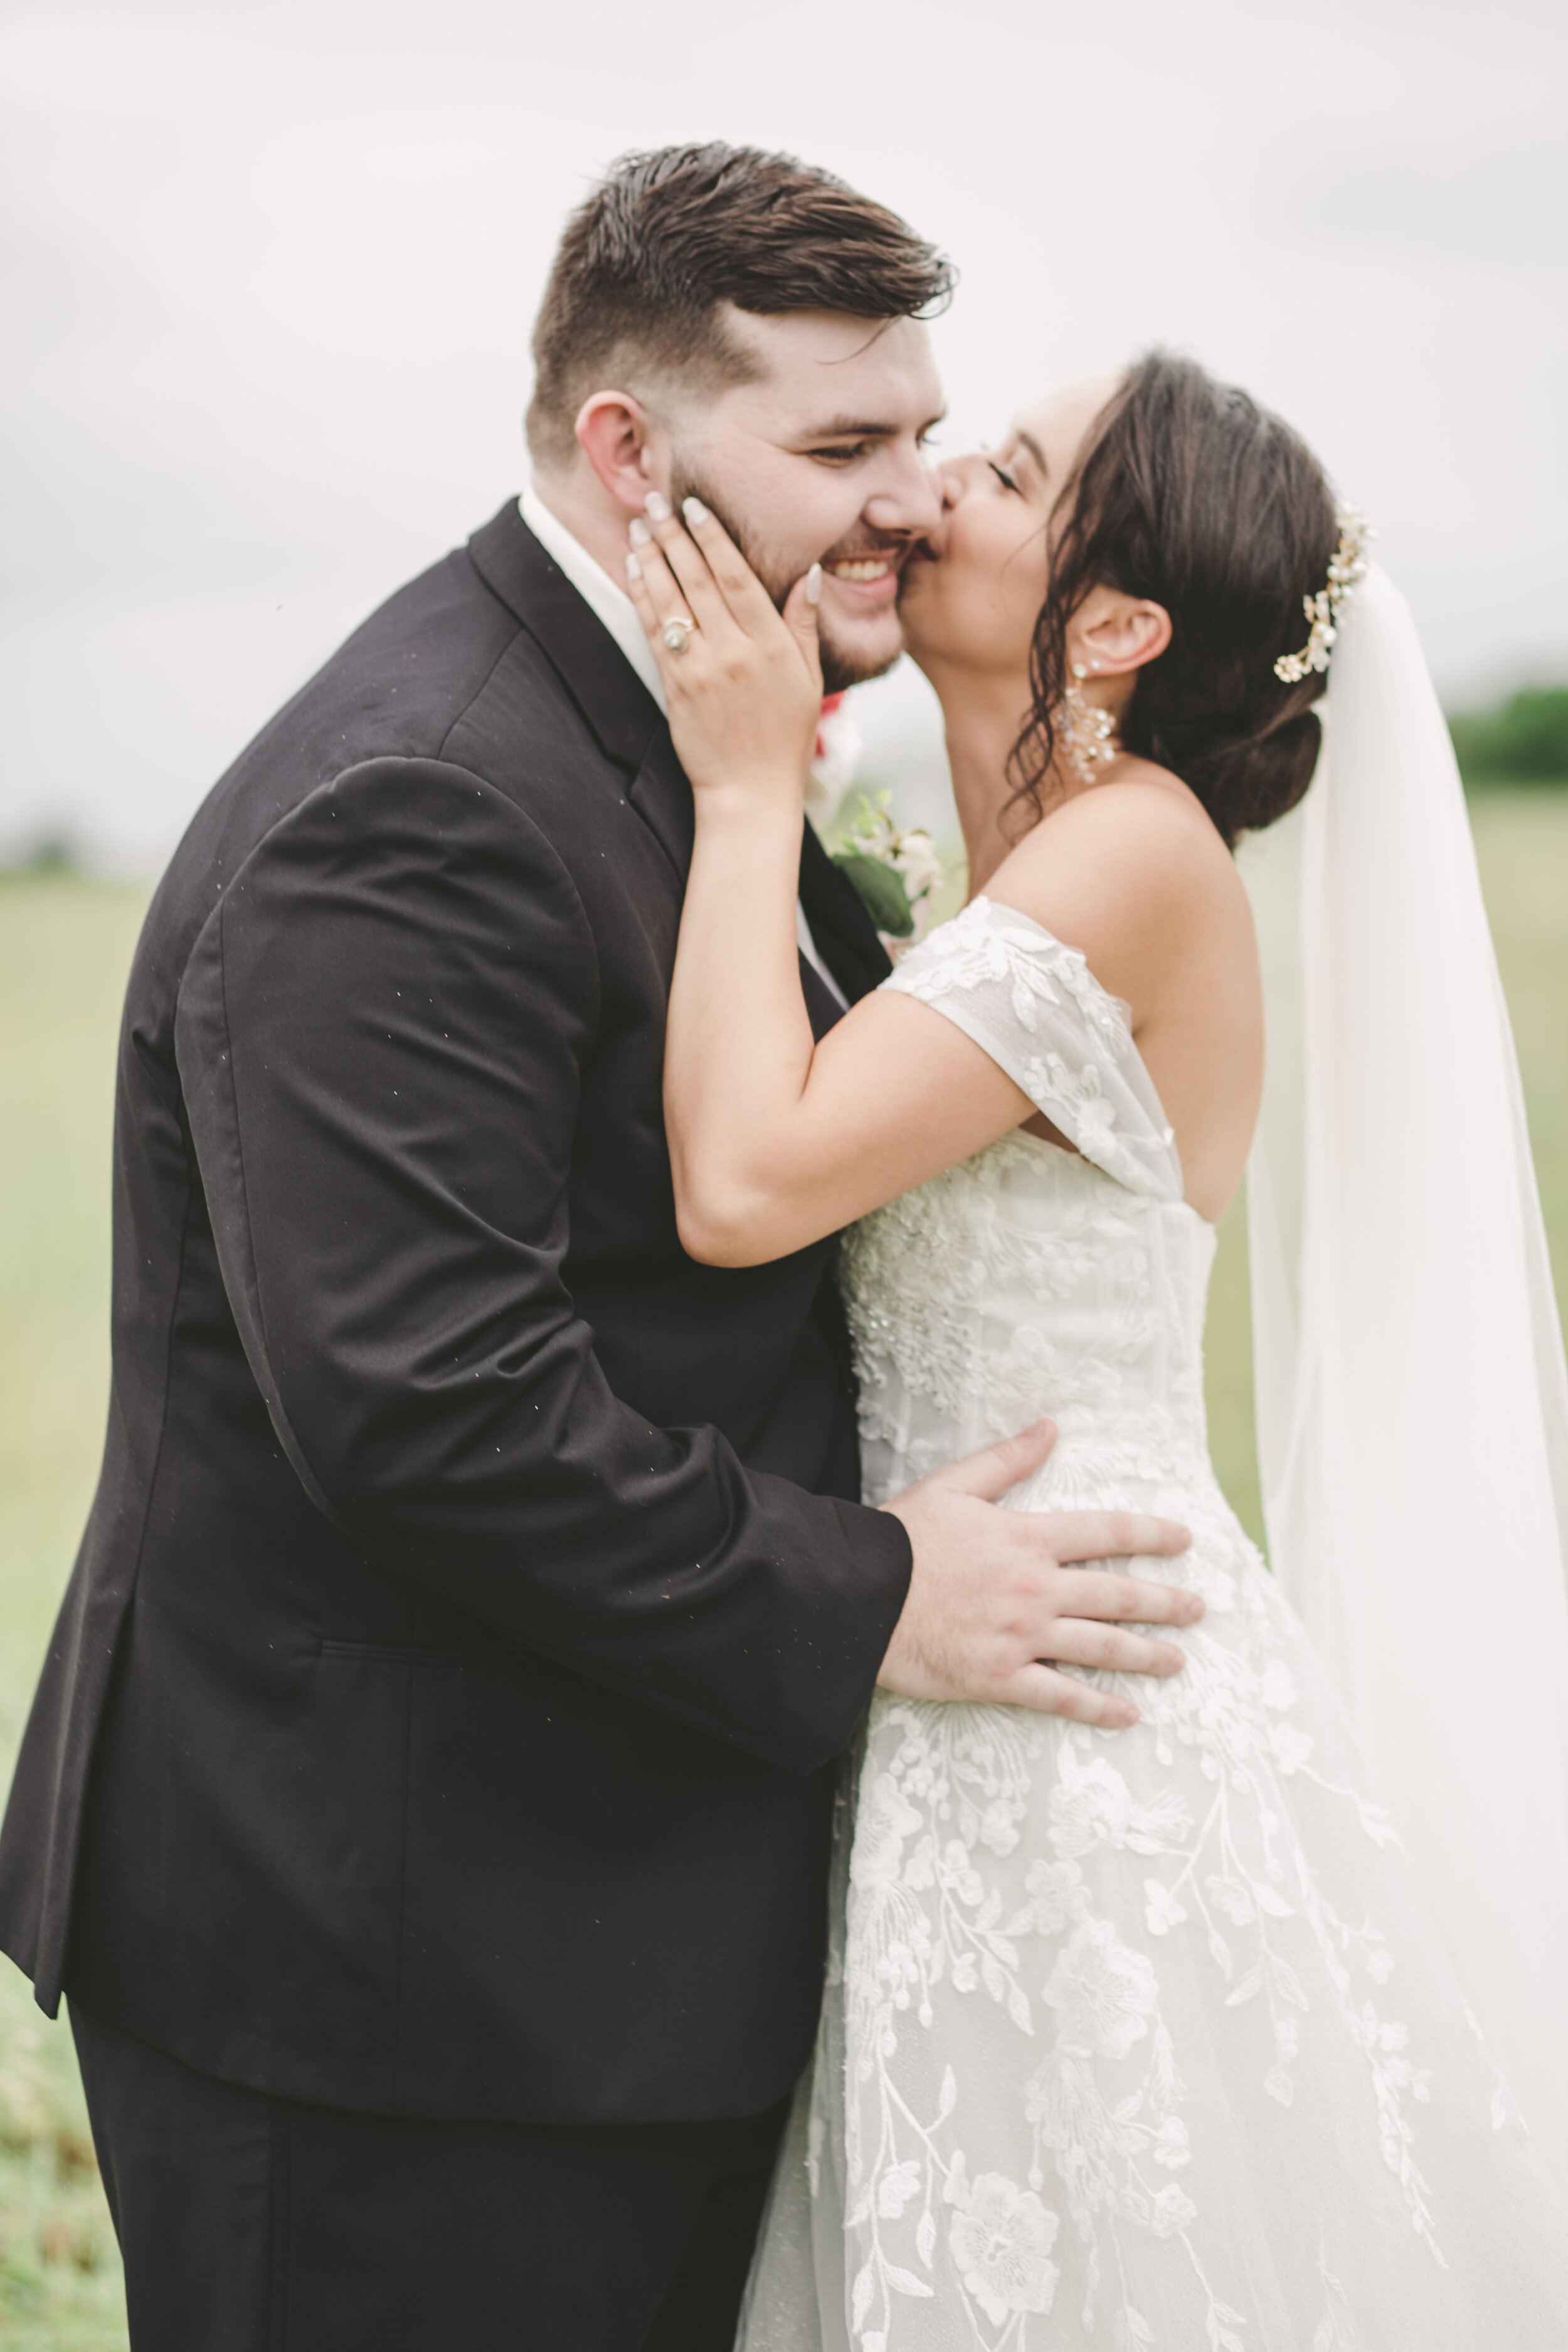 Tampa area wedding photographer, Carmela Blackwell Photography